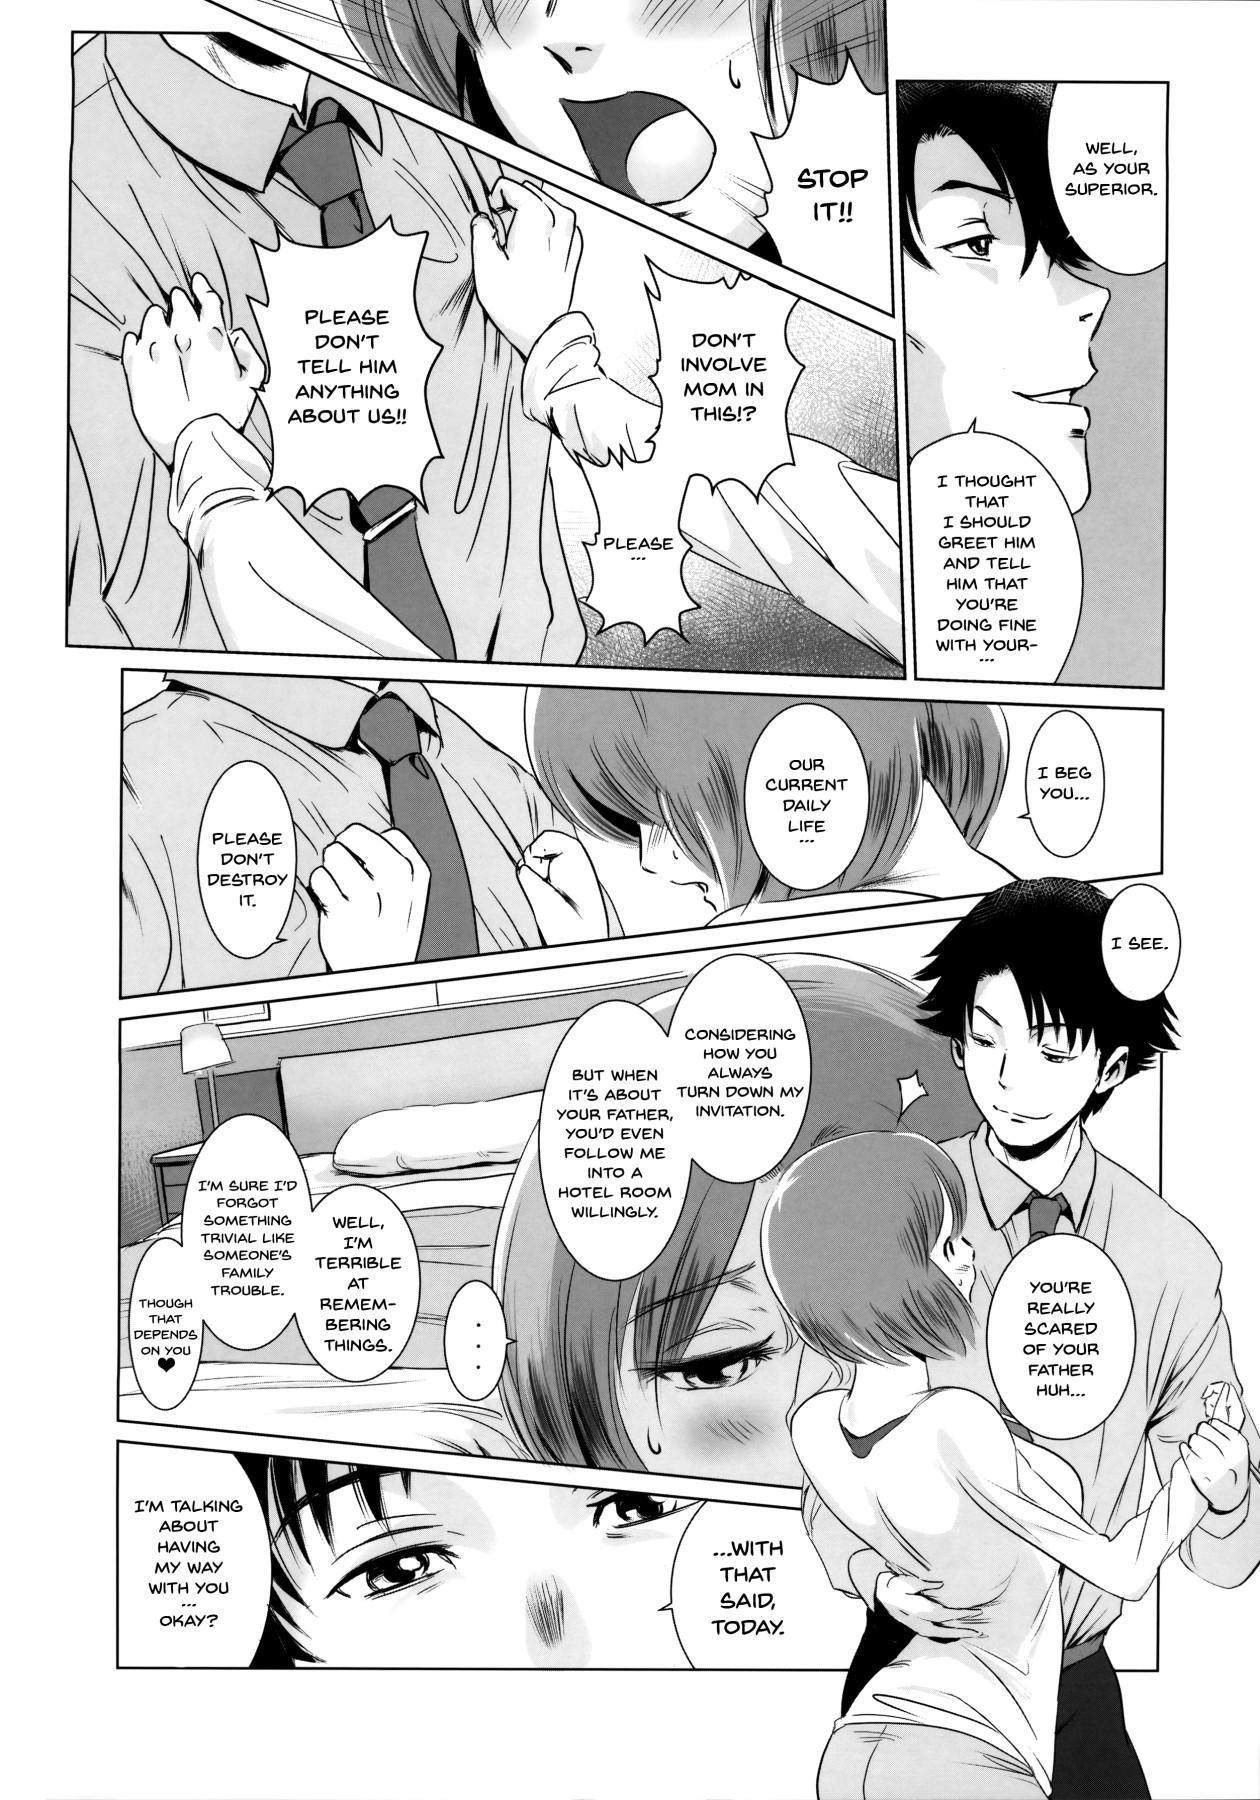 Twerking Story of the 'N' Situation - Situation#1 Kyouhaku - Original Twerking - Page 12